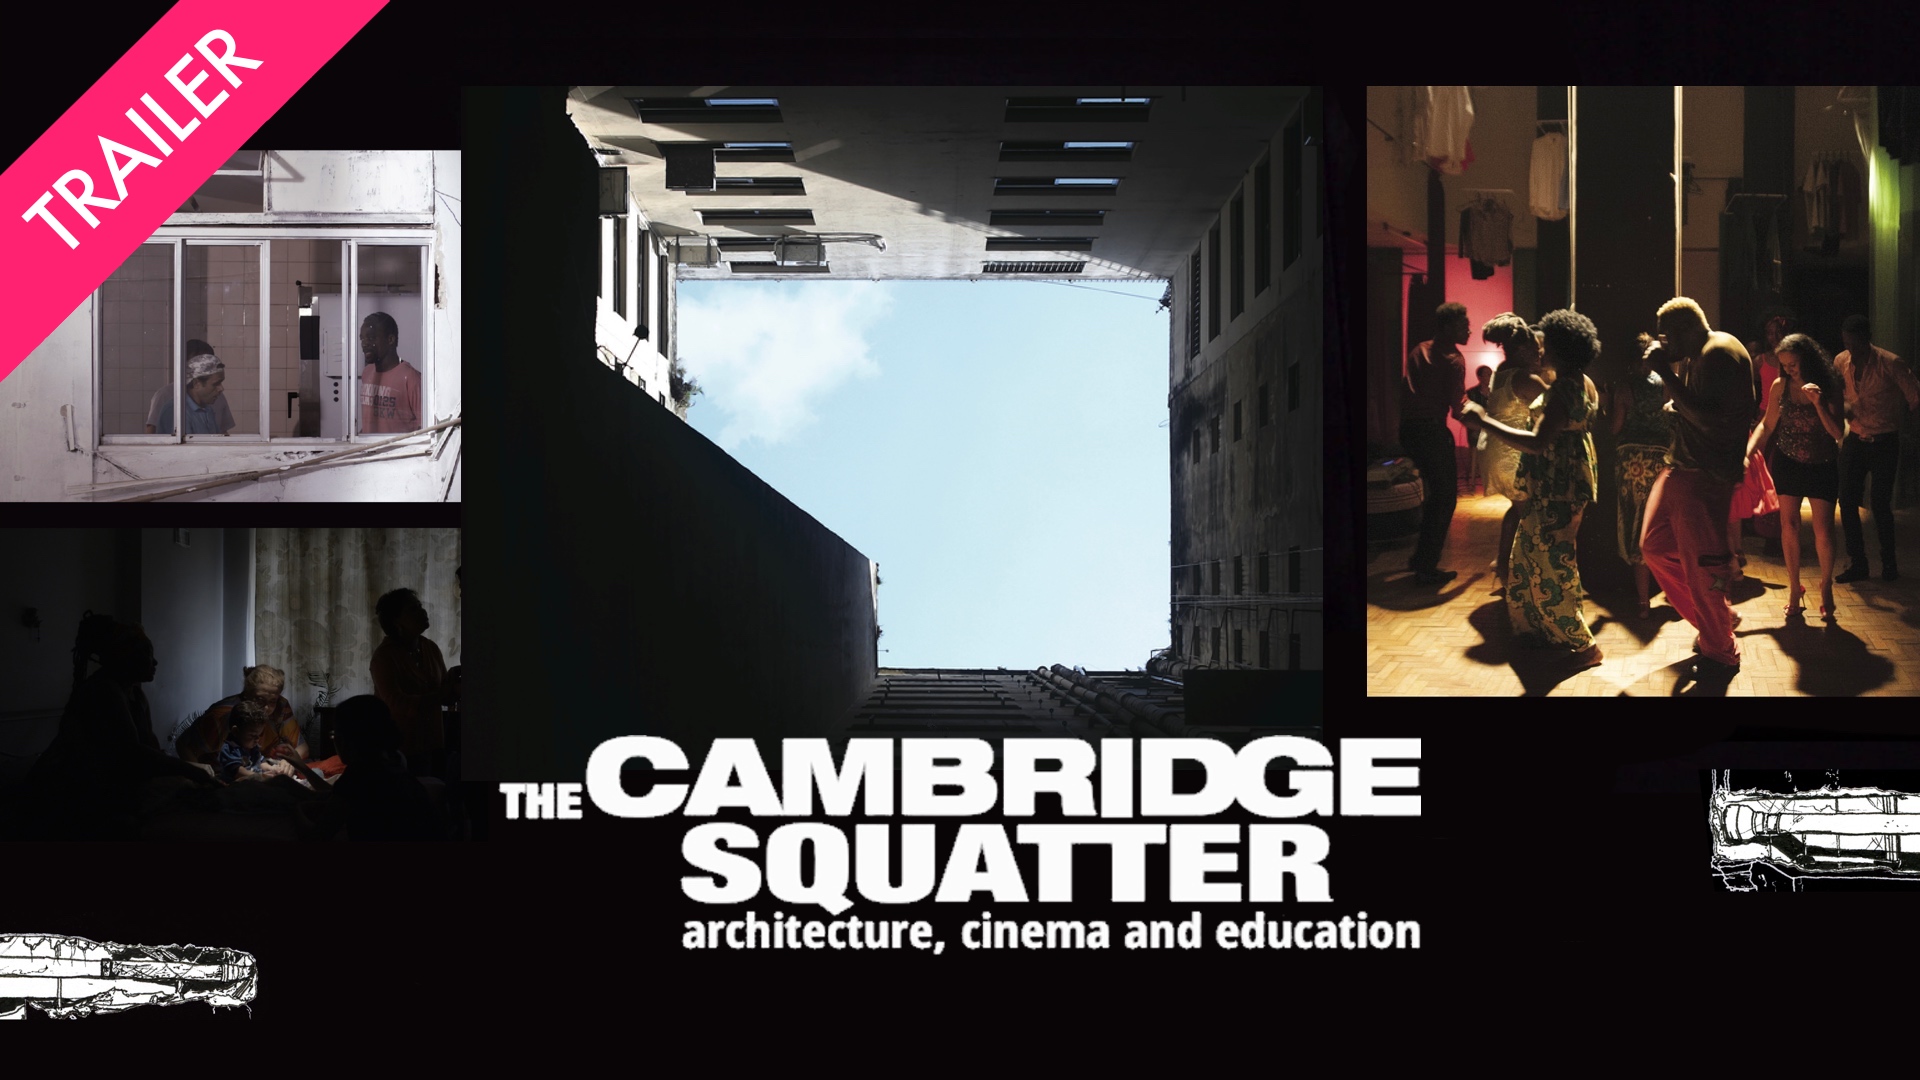 The Cambridge Squatter